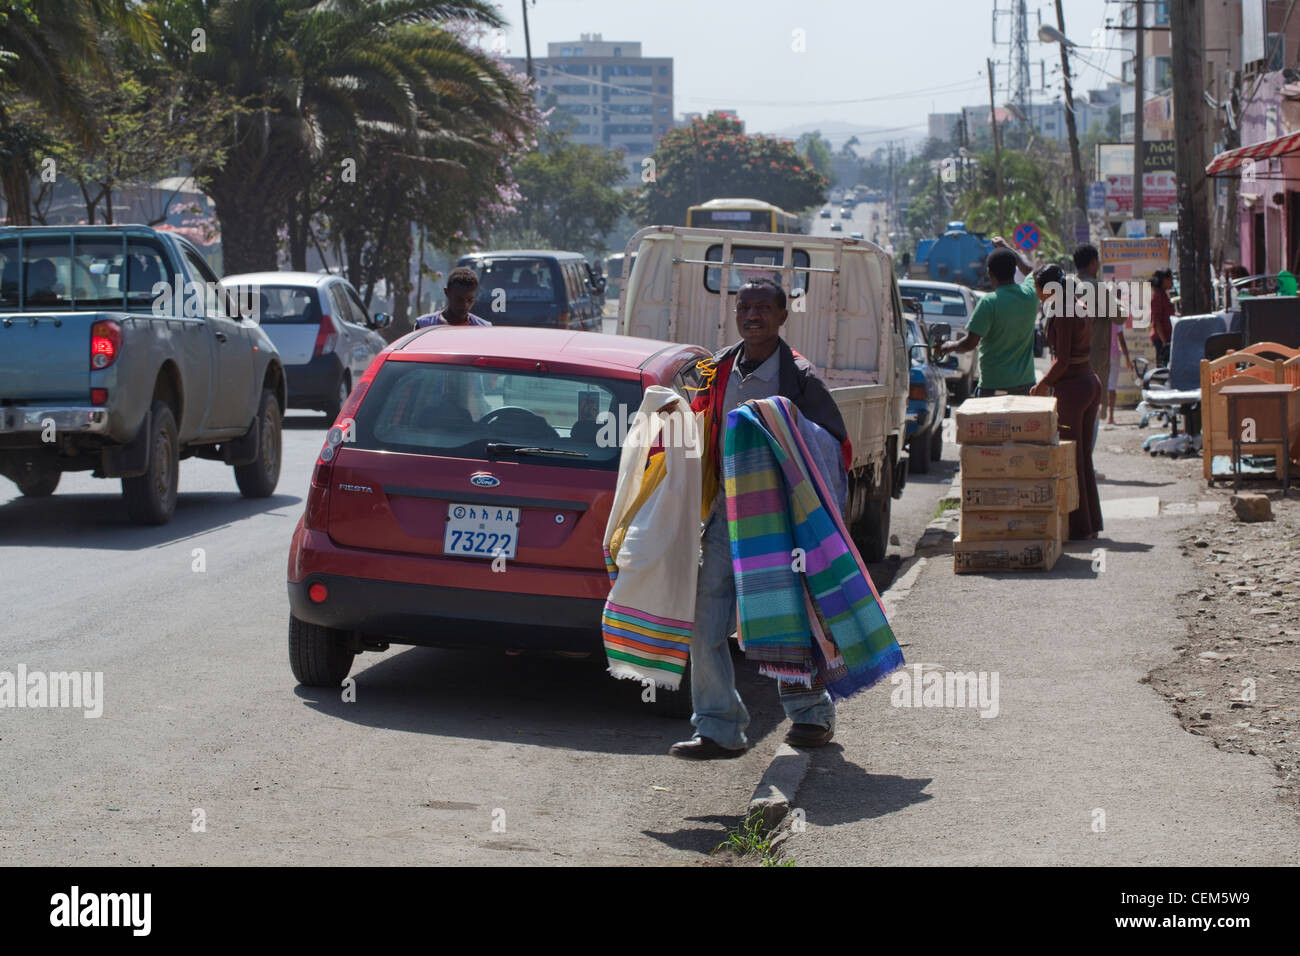 Etiopia ad Addis Abeba. Street commerciante di tessuti. Pedoni e traffico. Foto Stock